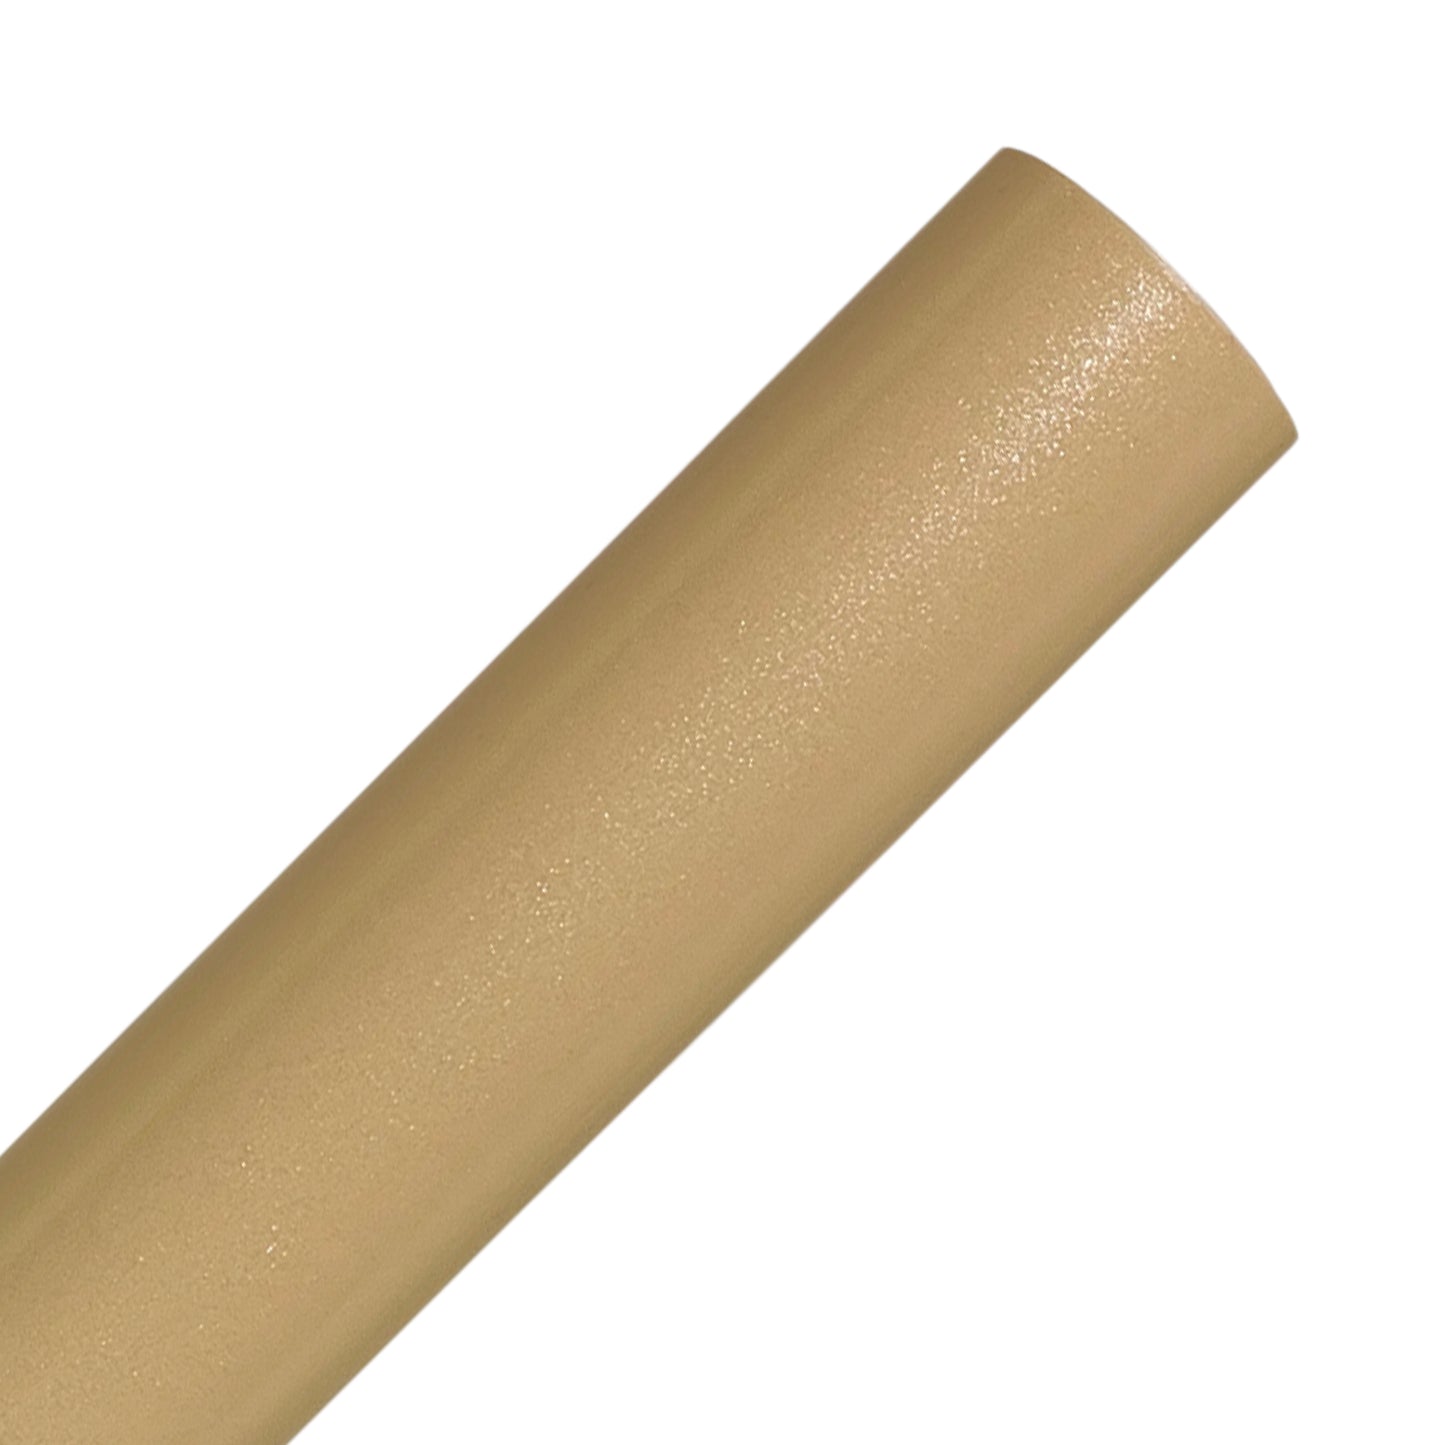 Cream Shimmer Glitter Adhesive Vinyl Rolls By Craftables